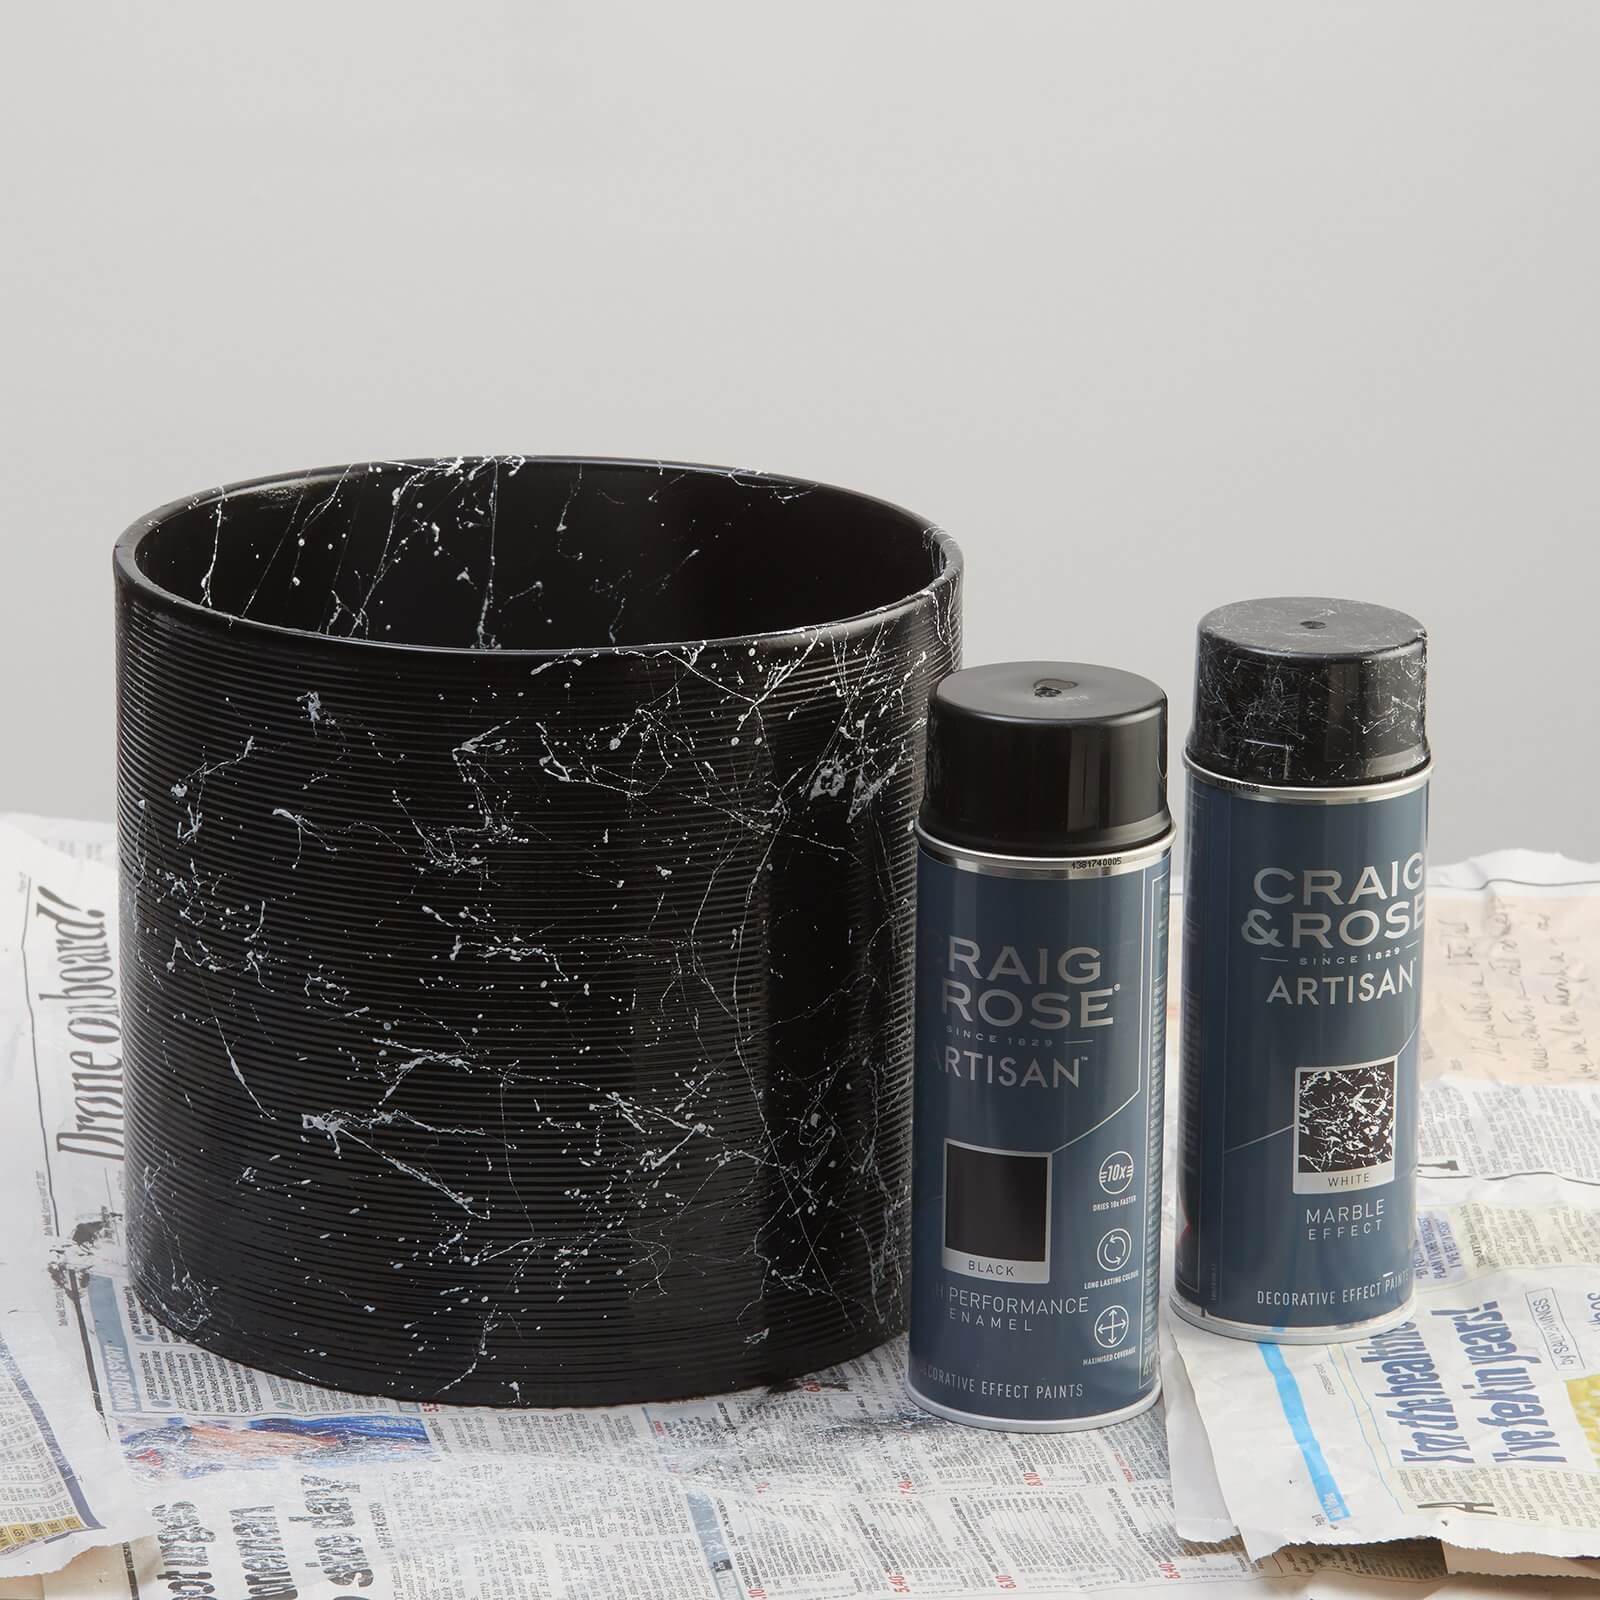 Craig & Rose Artisan Marble Effect Spray Paint Paint White - 400ml